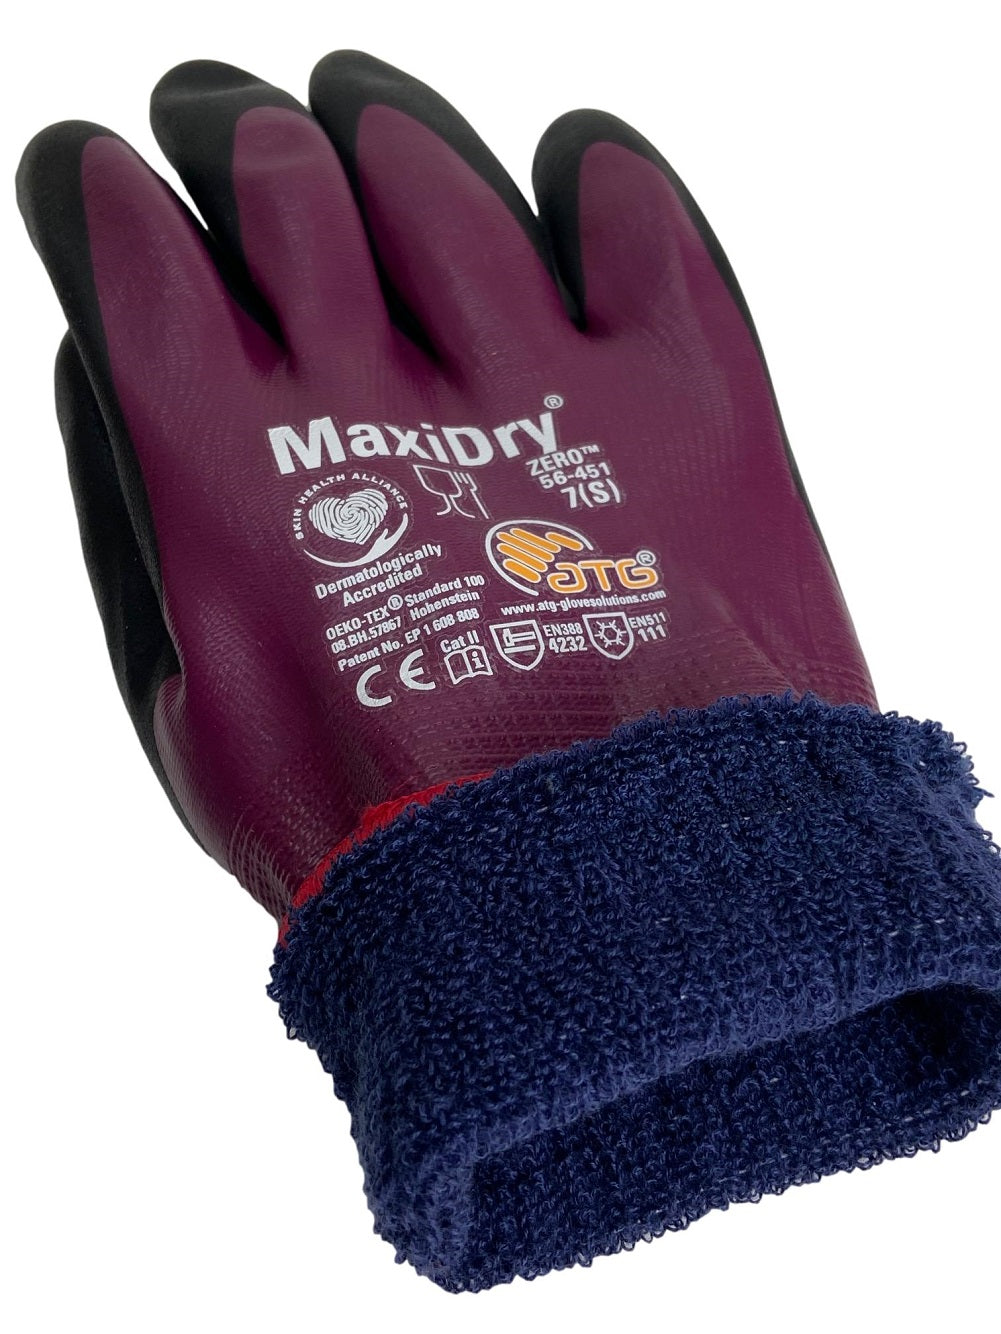 ATG MaxiDry Zero Gloves Thermal Lining protexU